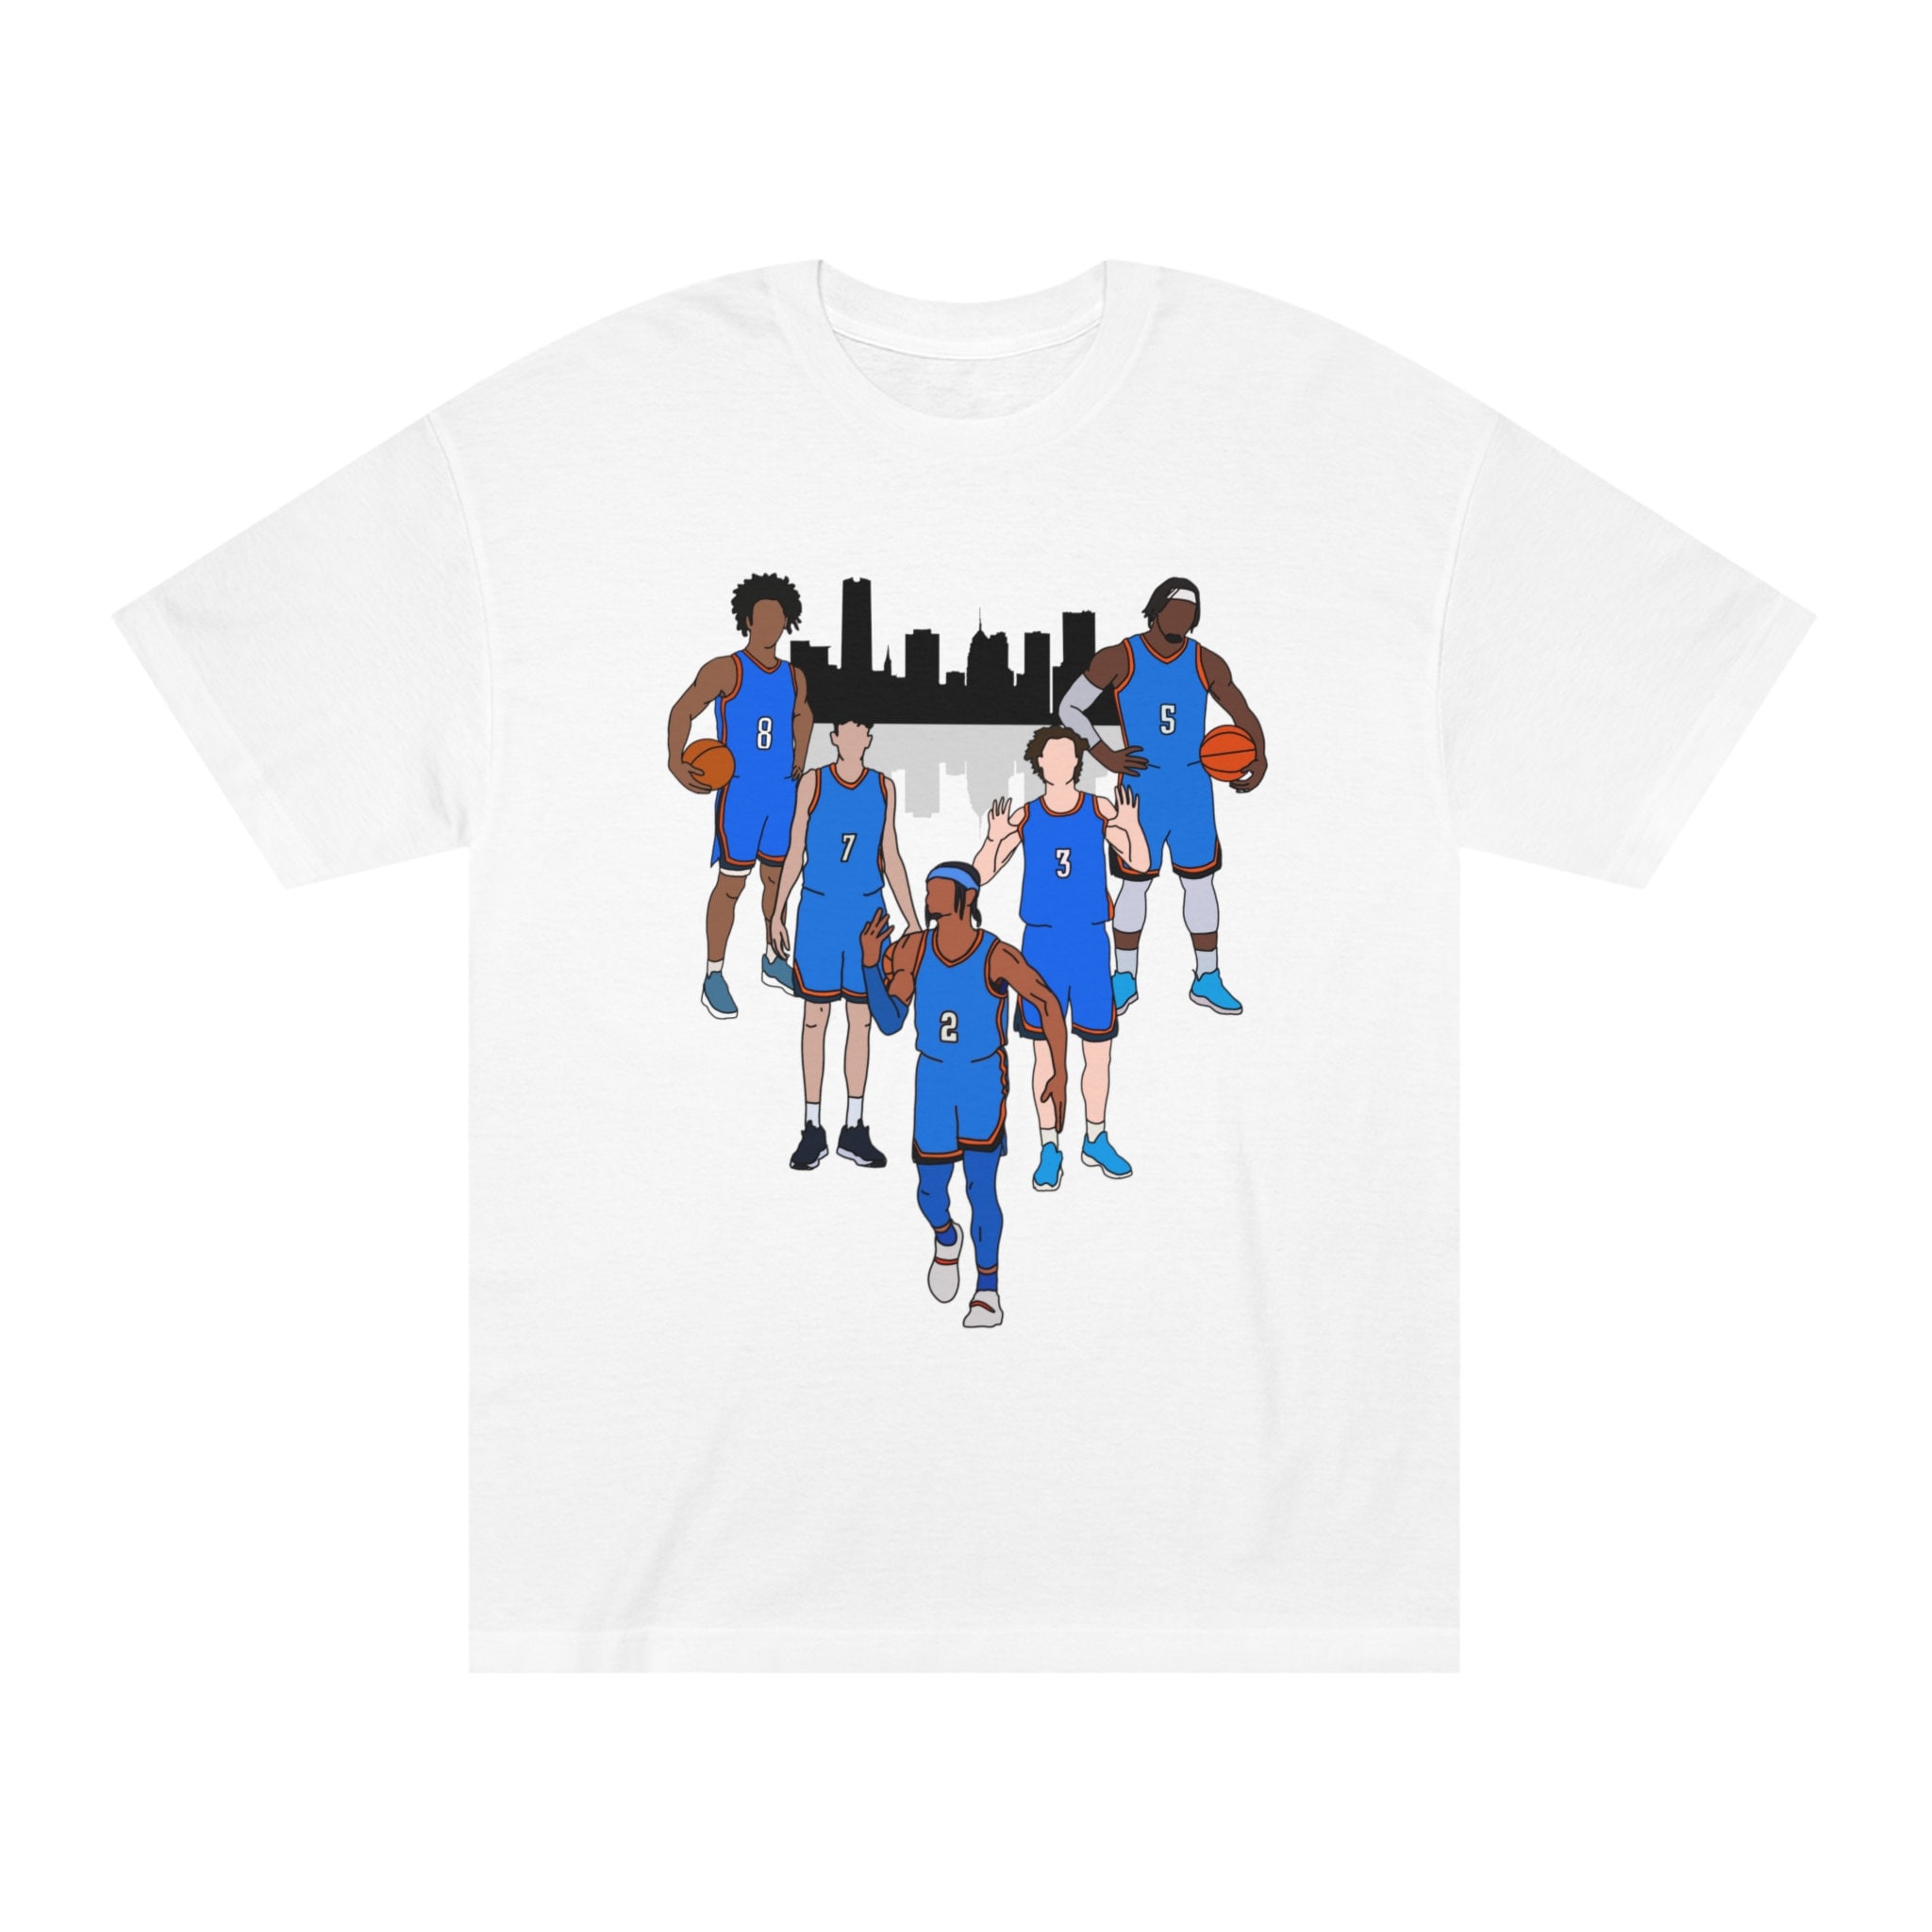 NBA Oklahoma City Thunder Women's Dolman Short Sleeve T-Shirt - S